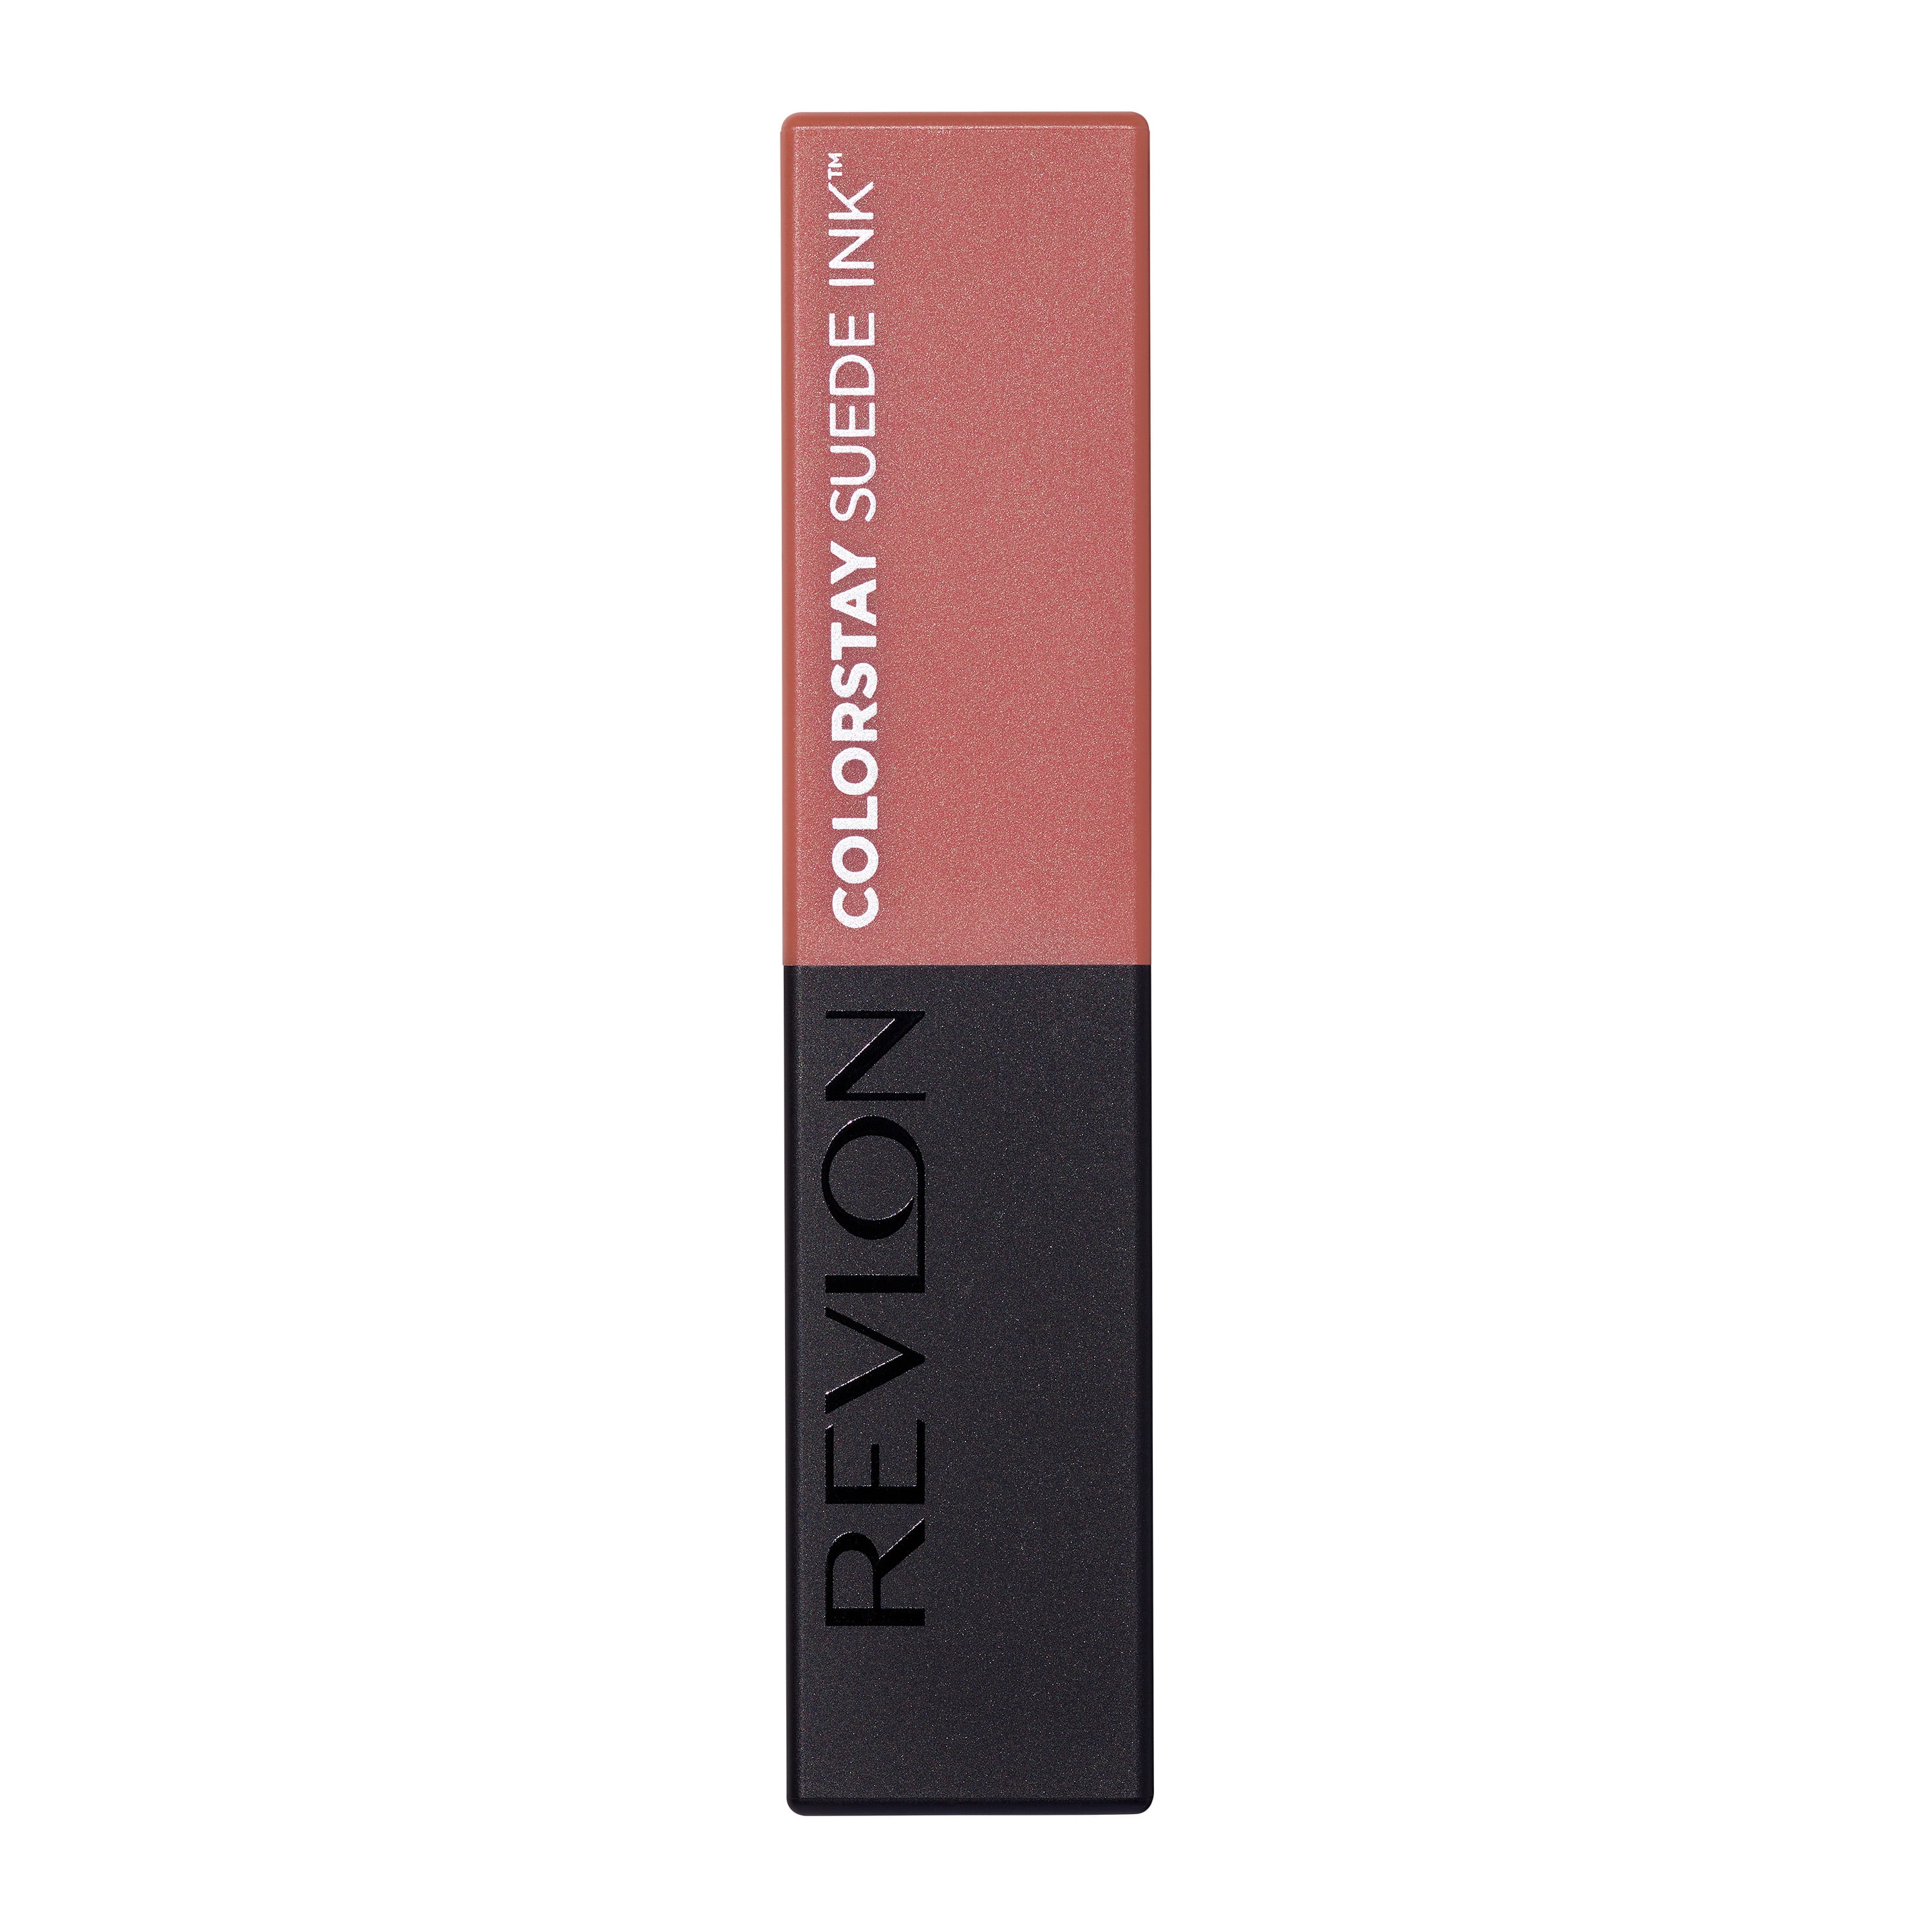 Revlon Lipstick by Revlon, ColorStay Suede Ink, Built-in Primer, Infused with Vitamin E, Waterproof, Smudgeproof, Matte Color, 001 Gut Instinct, 001 Gut Instict